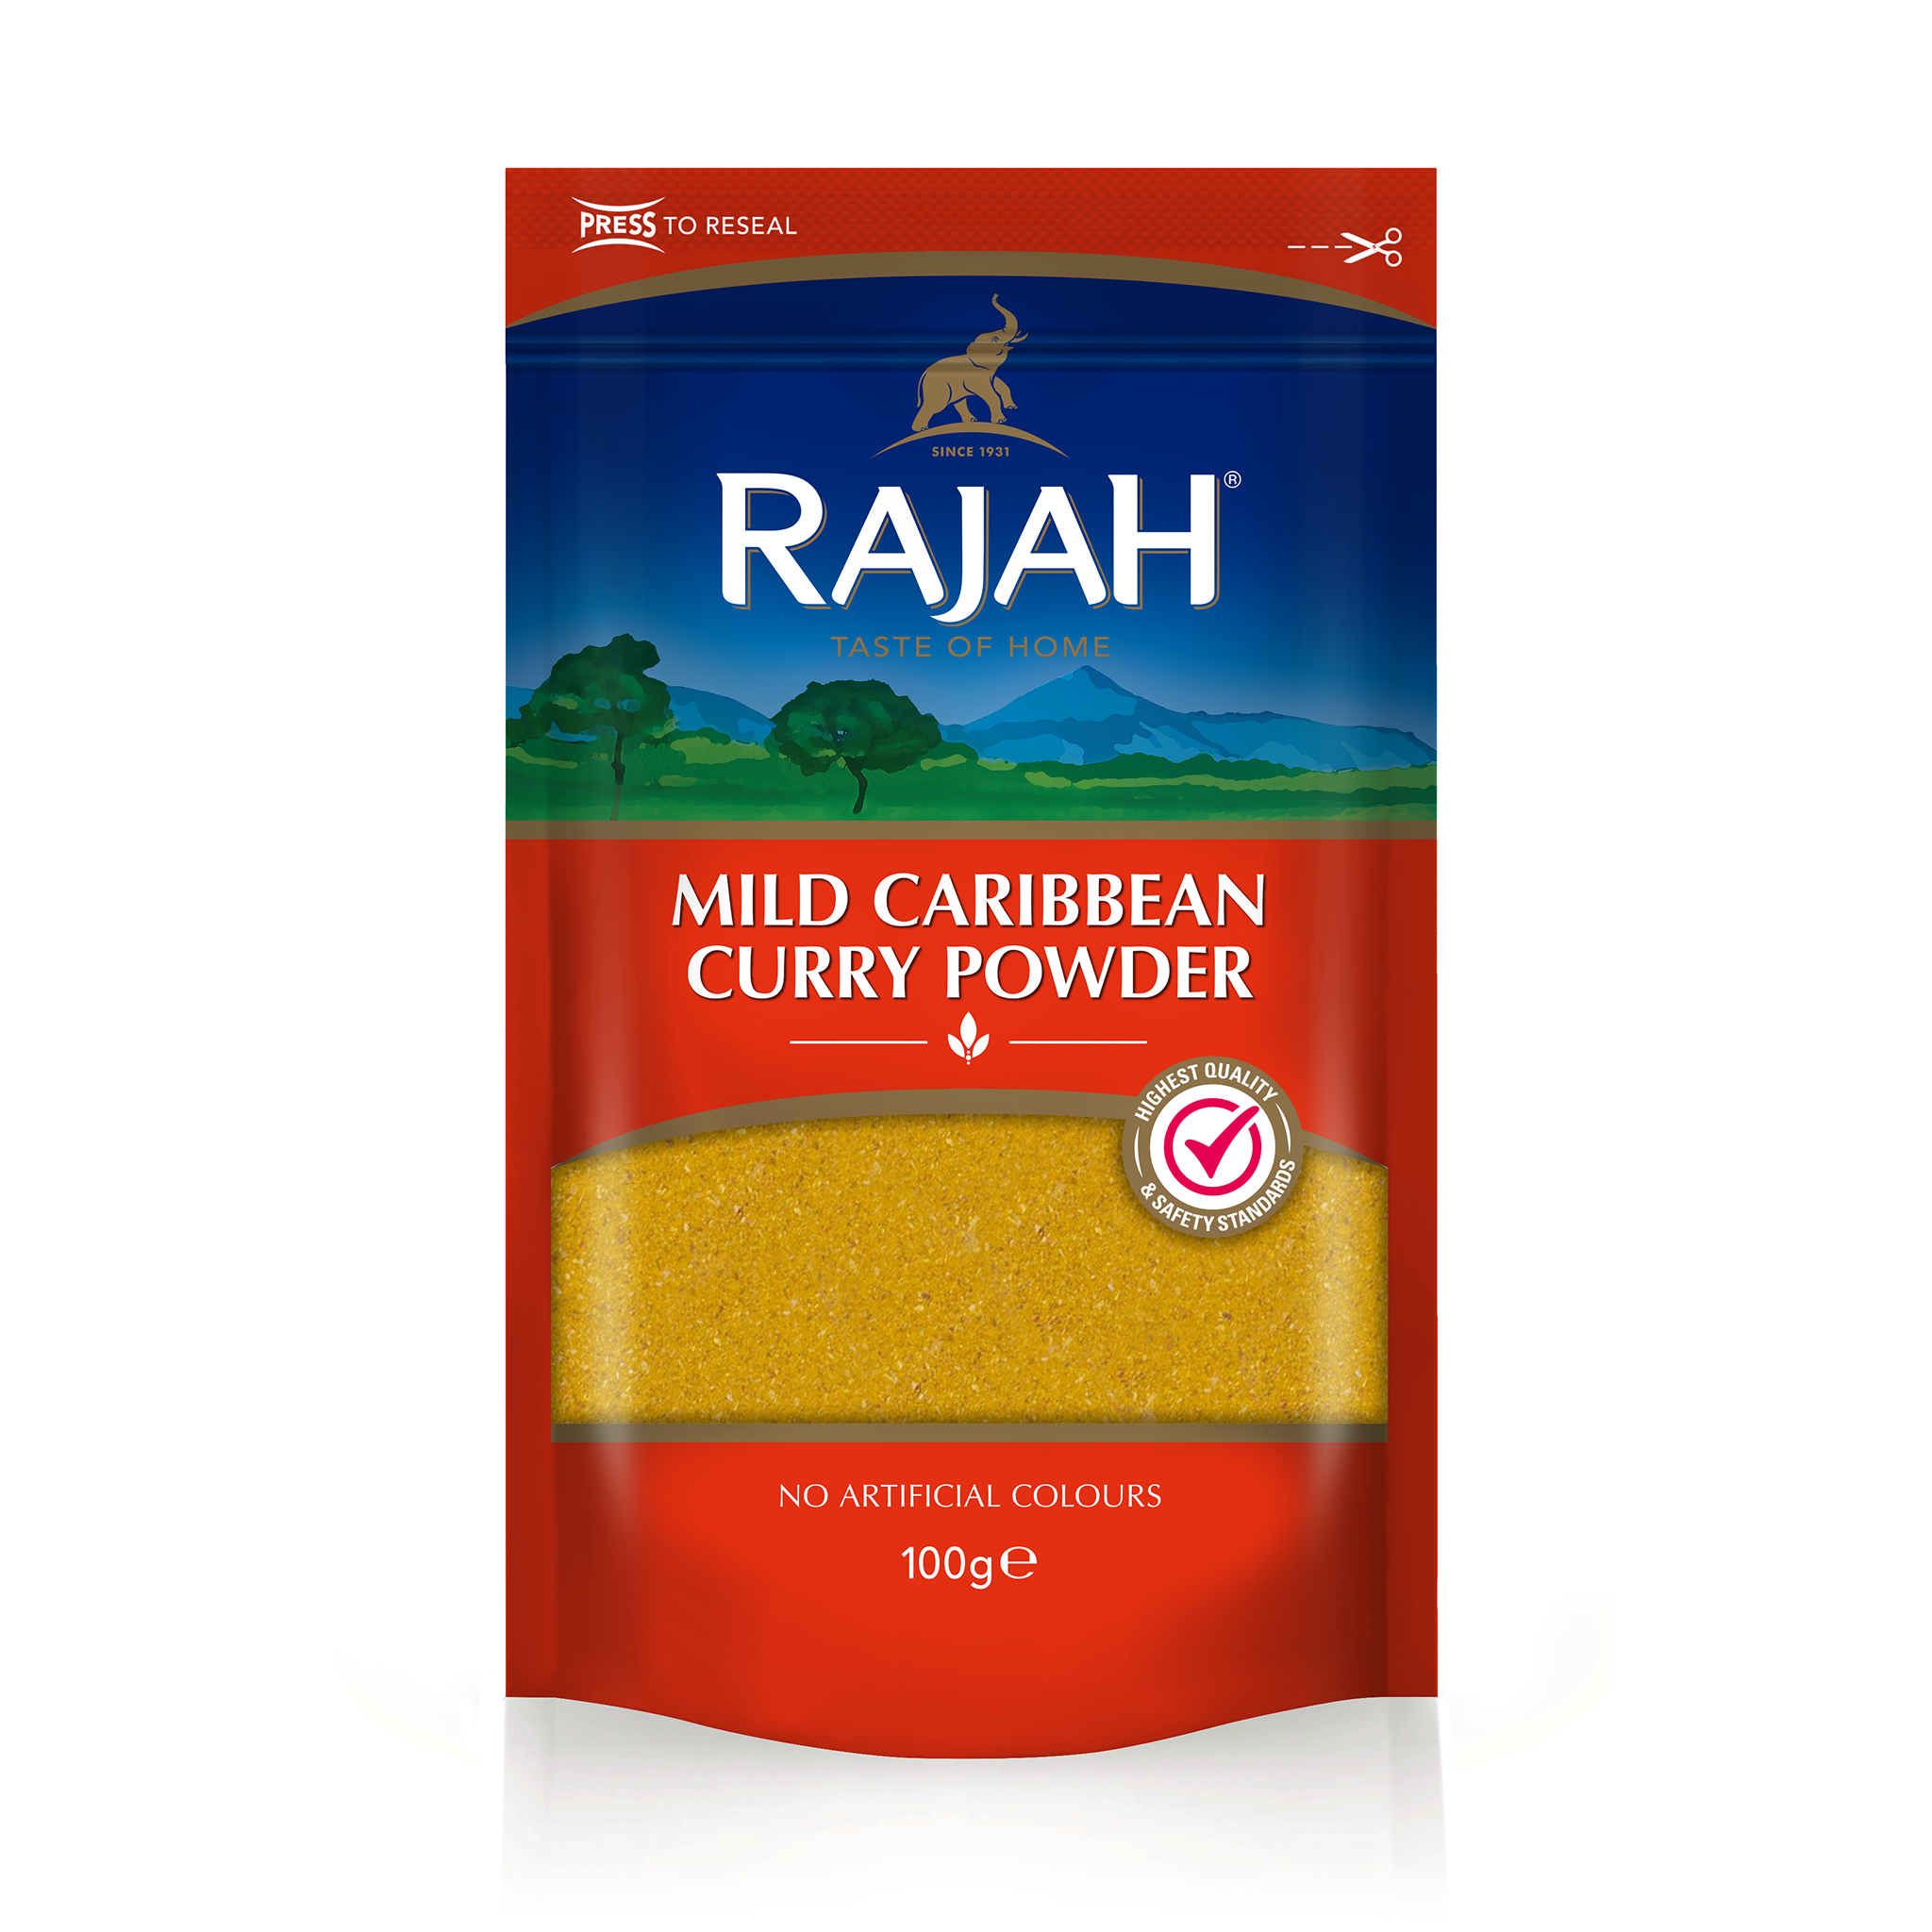 Mild Caribbean Curry Powder 100g by Rajah